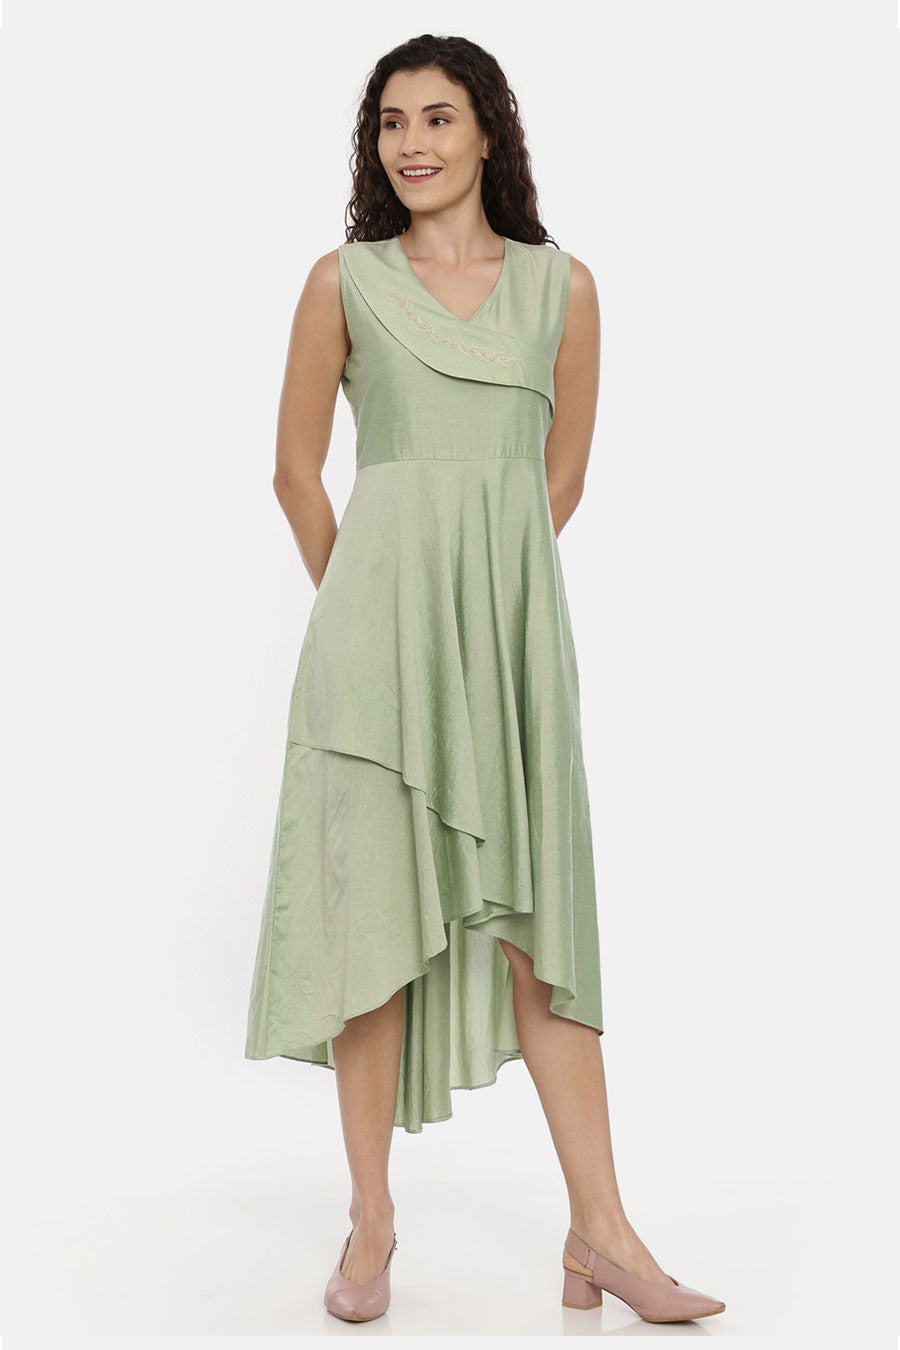 Green High-Low Asymmetrical Dress